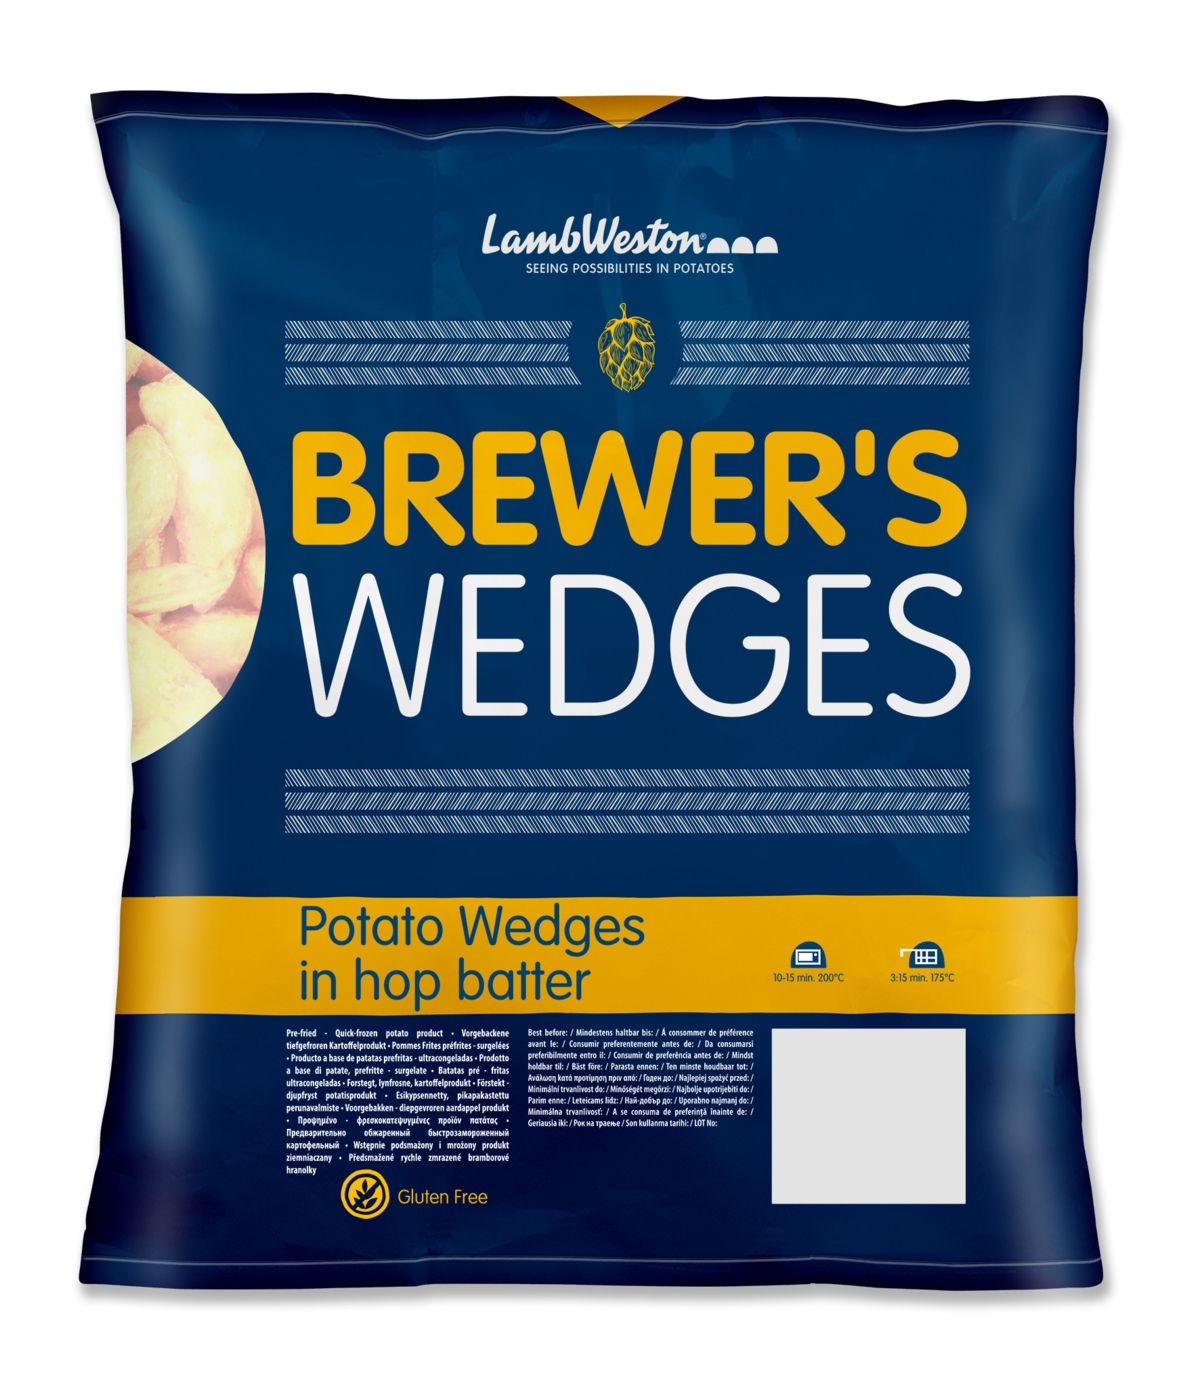 Lamb Weston Brewer's Wedges pack 2